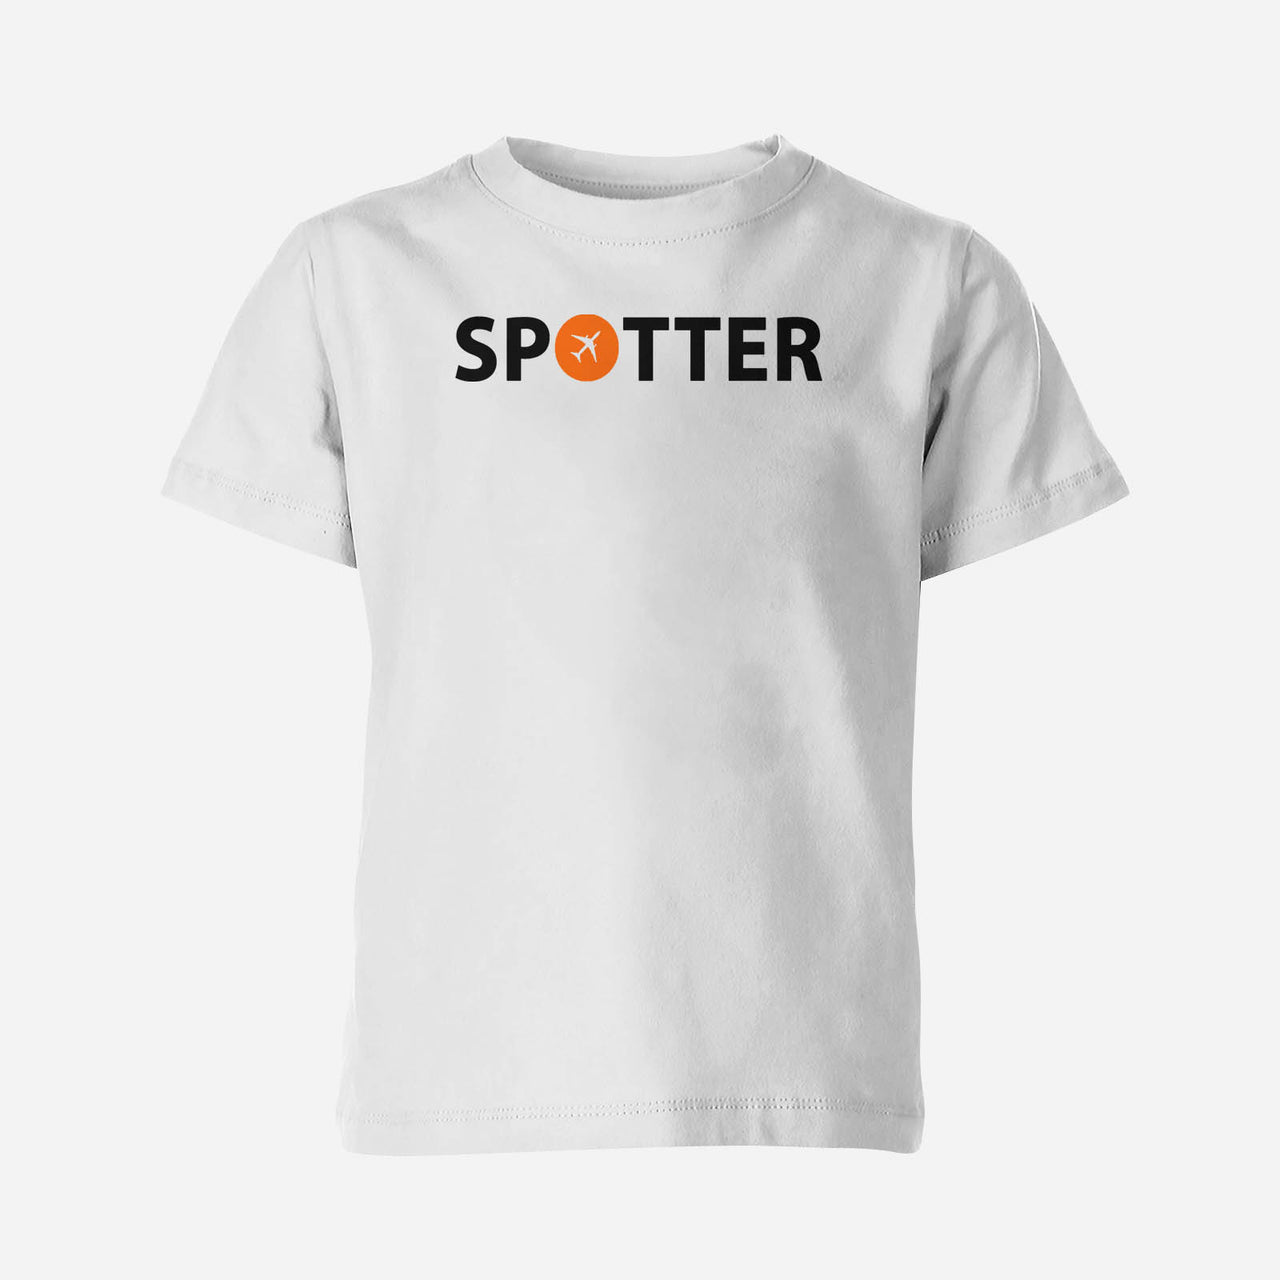 Spotter Designed Children T-Shirts